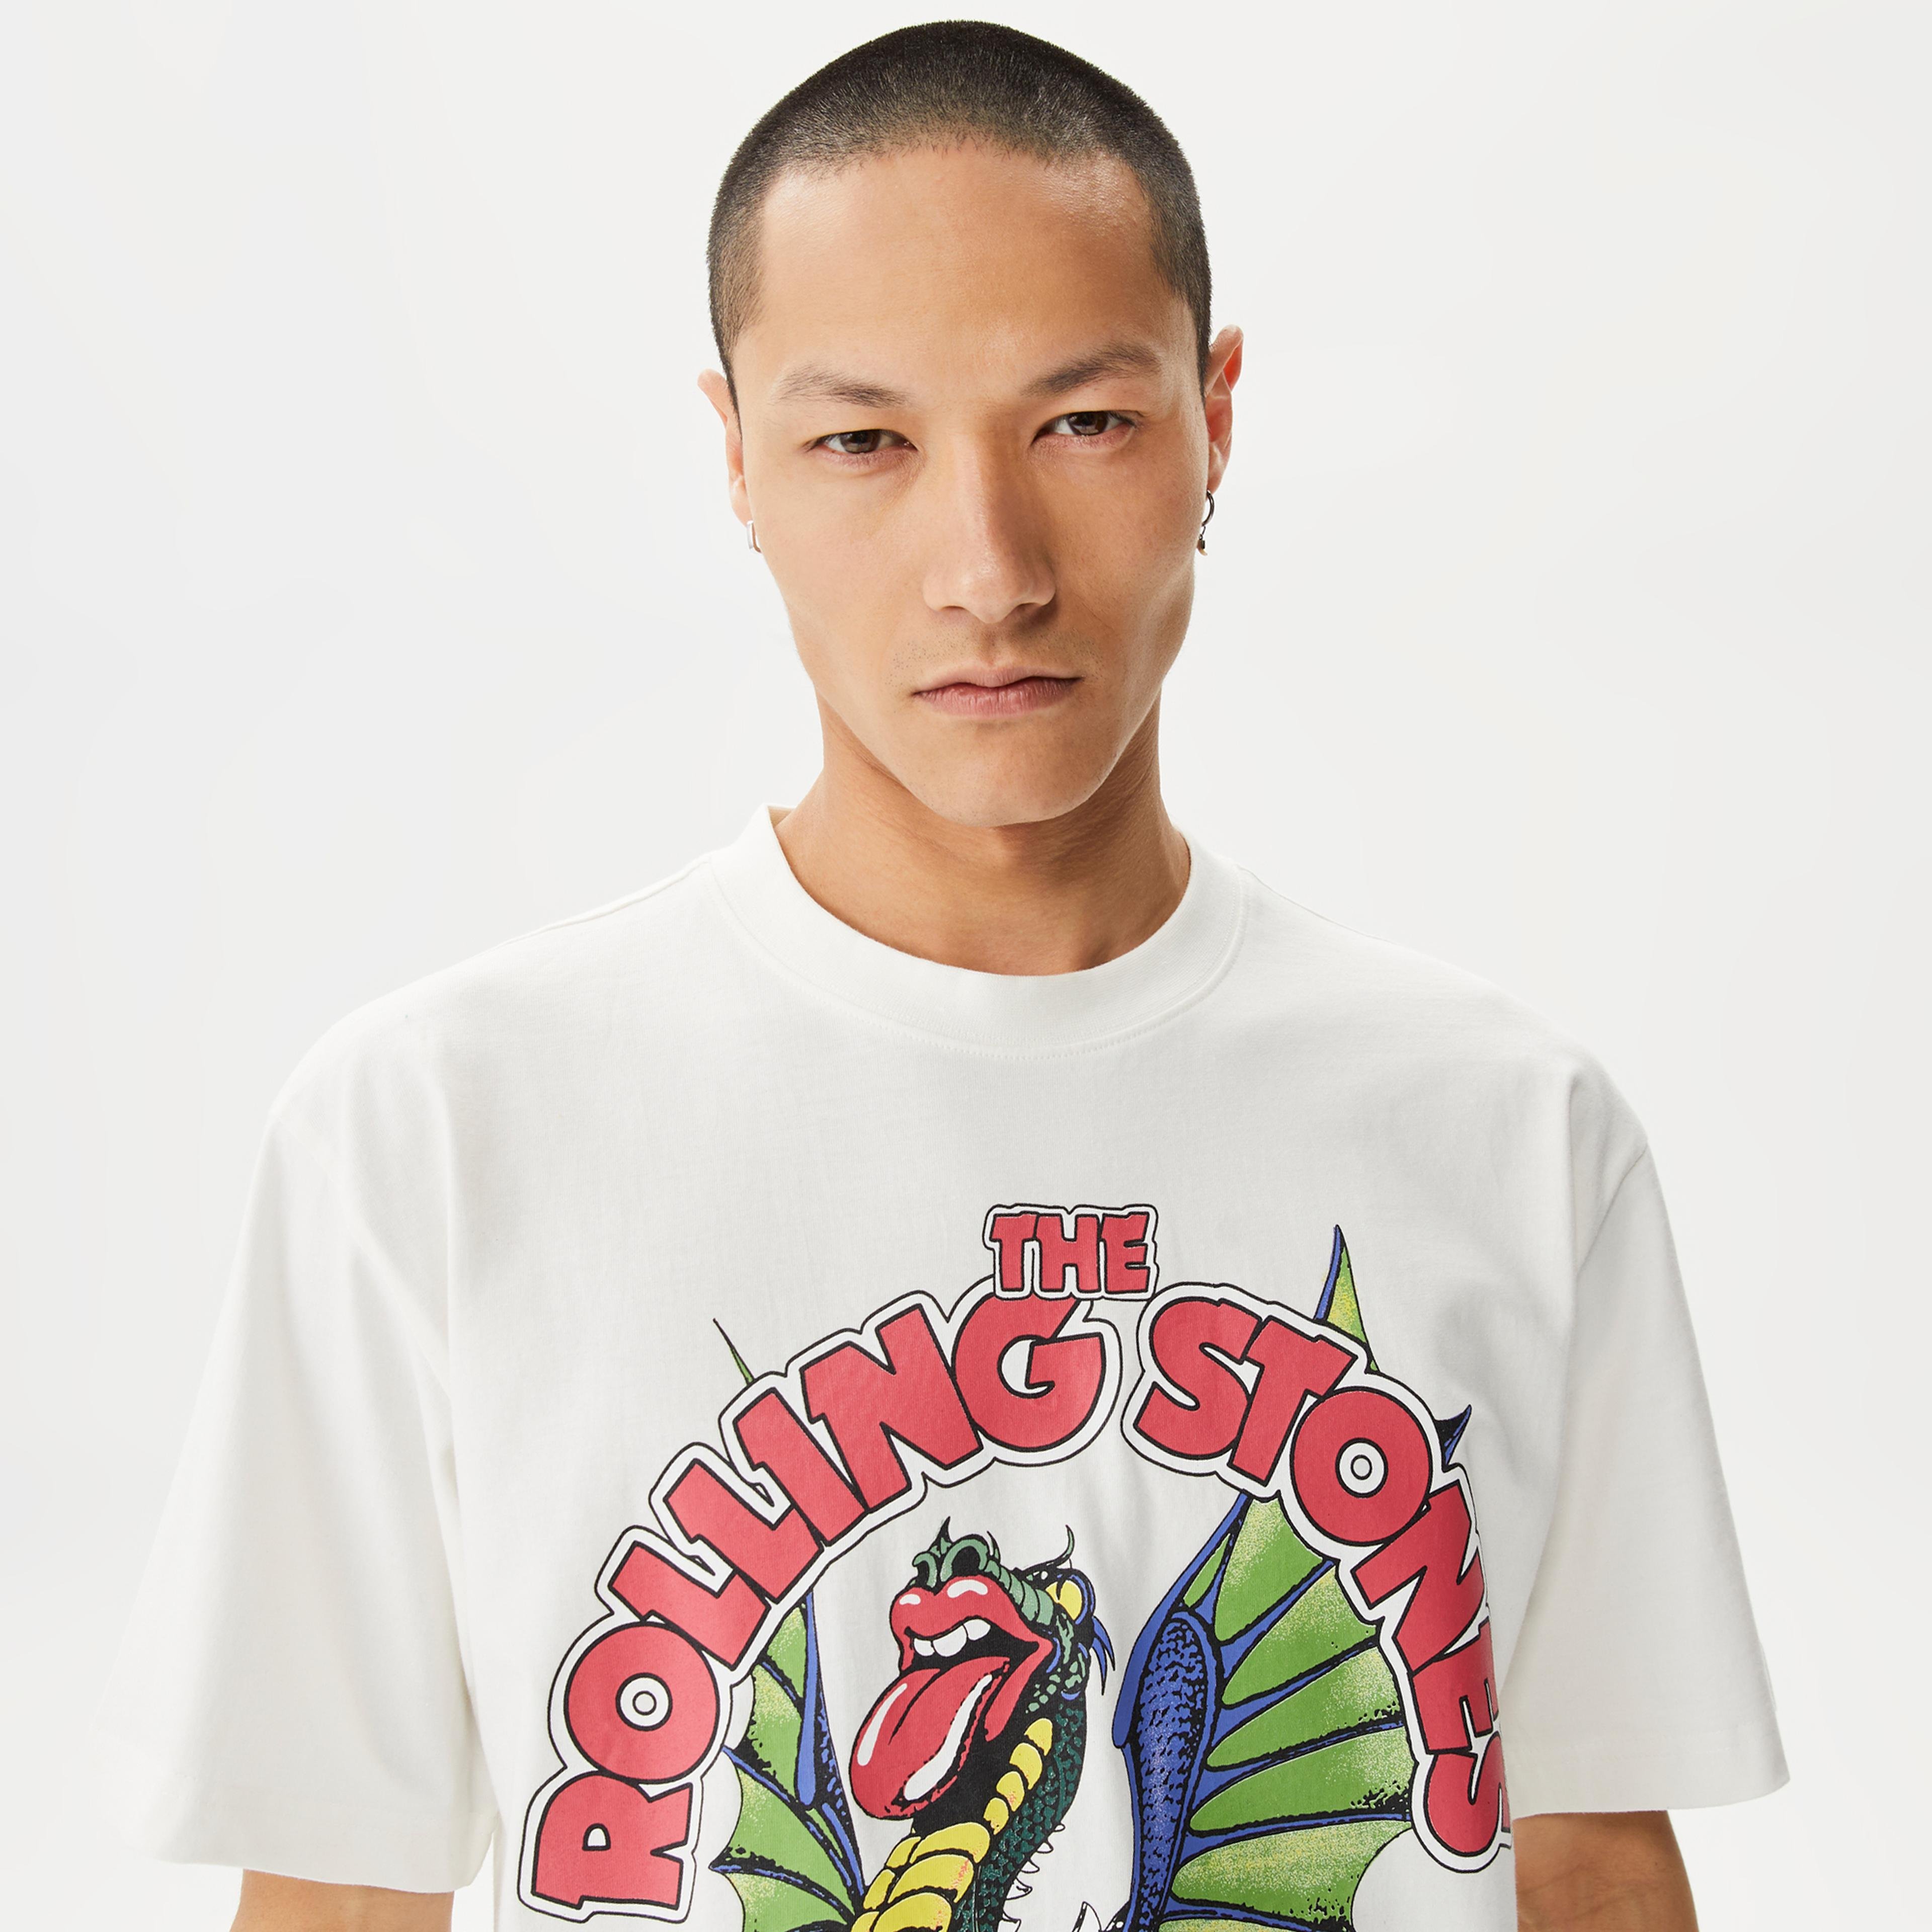 Market x Rolling Stones Chinatown Bewaret Erkek Krem T-Shirt